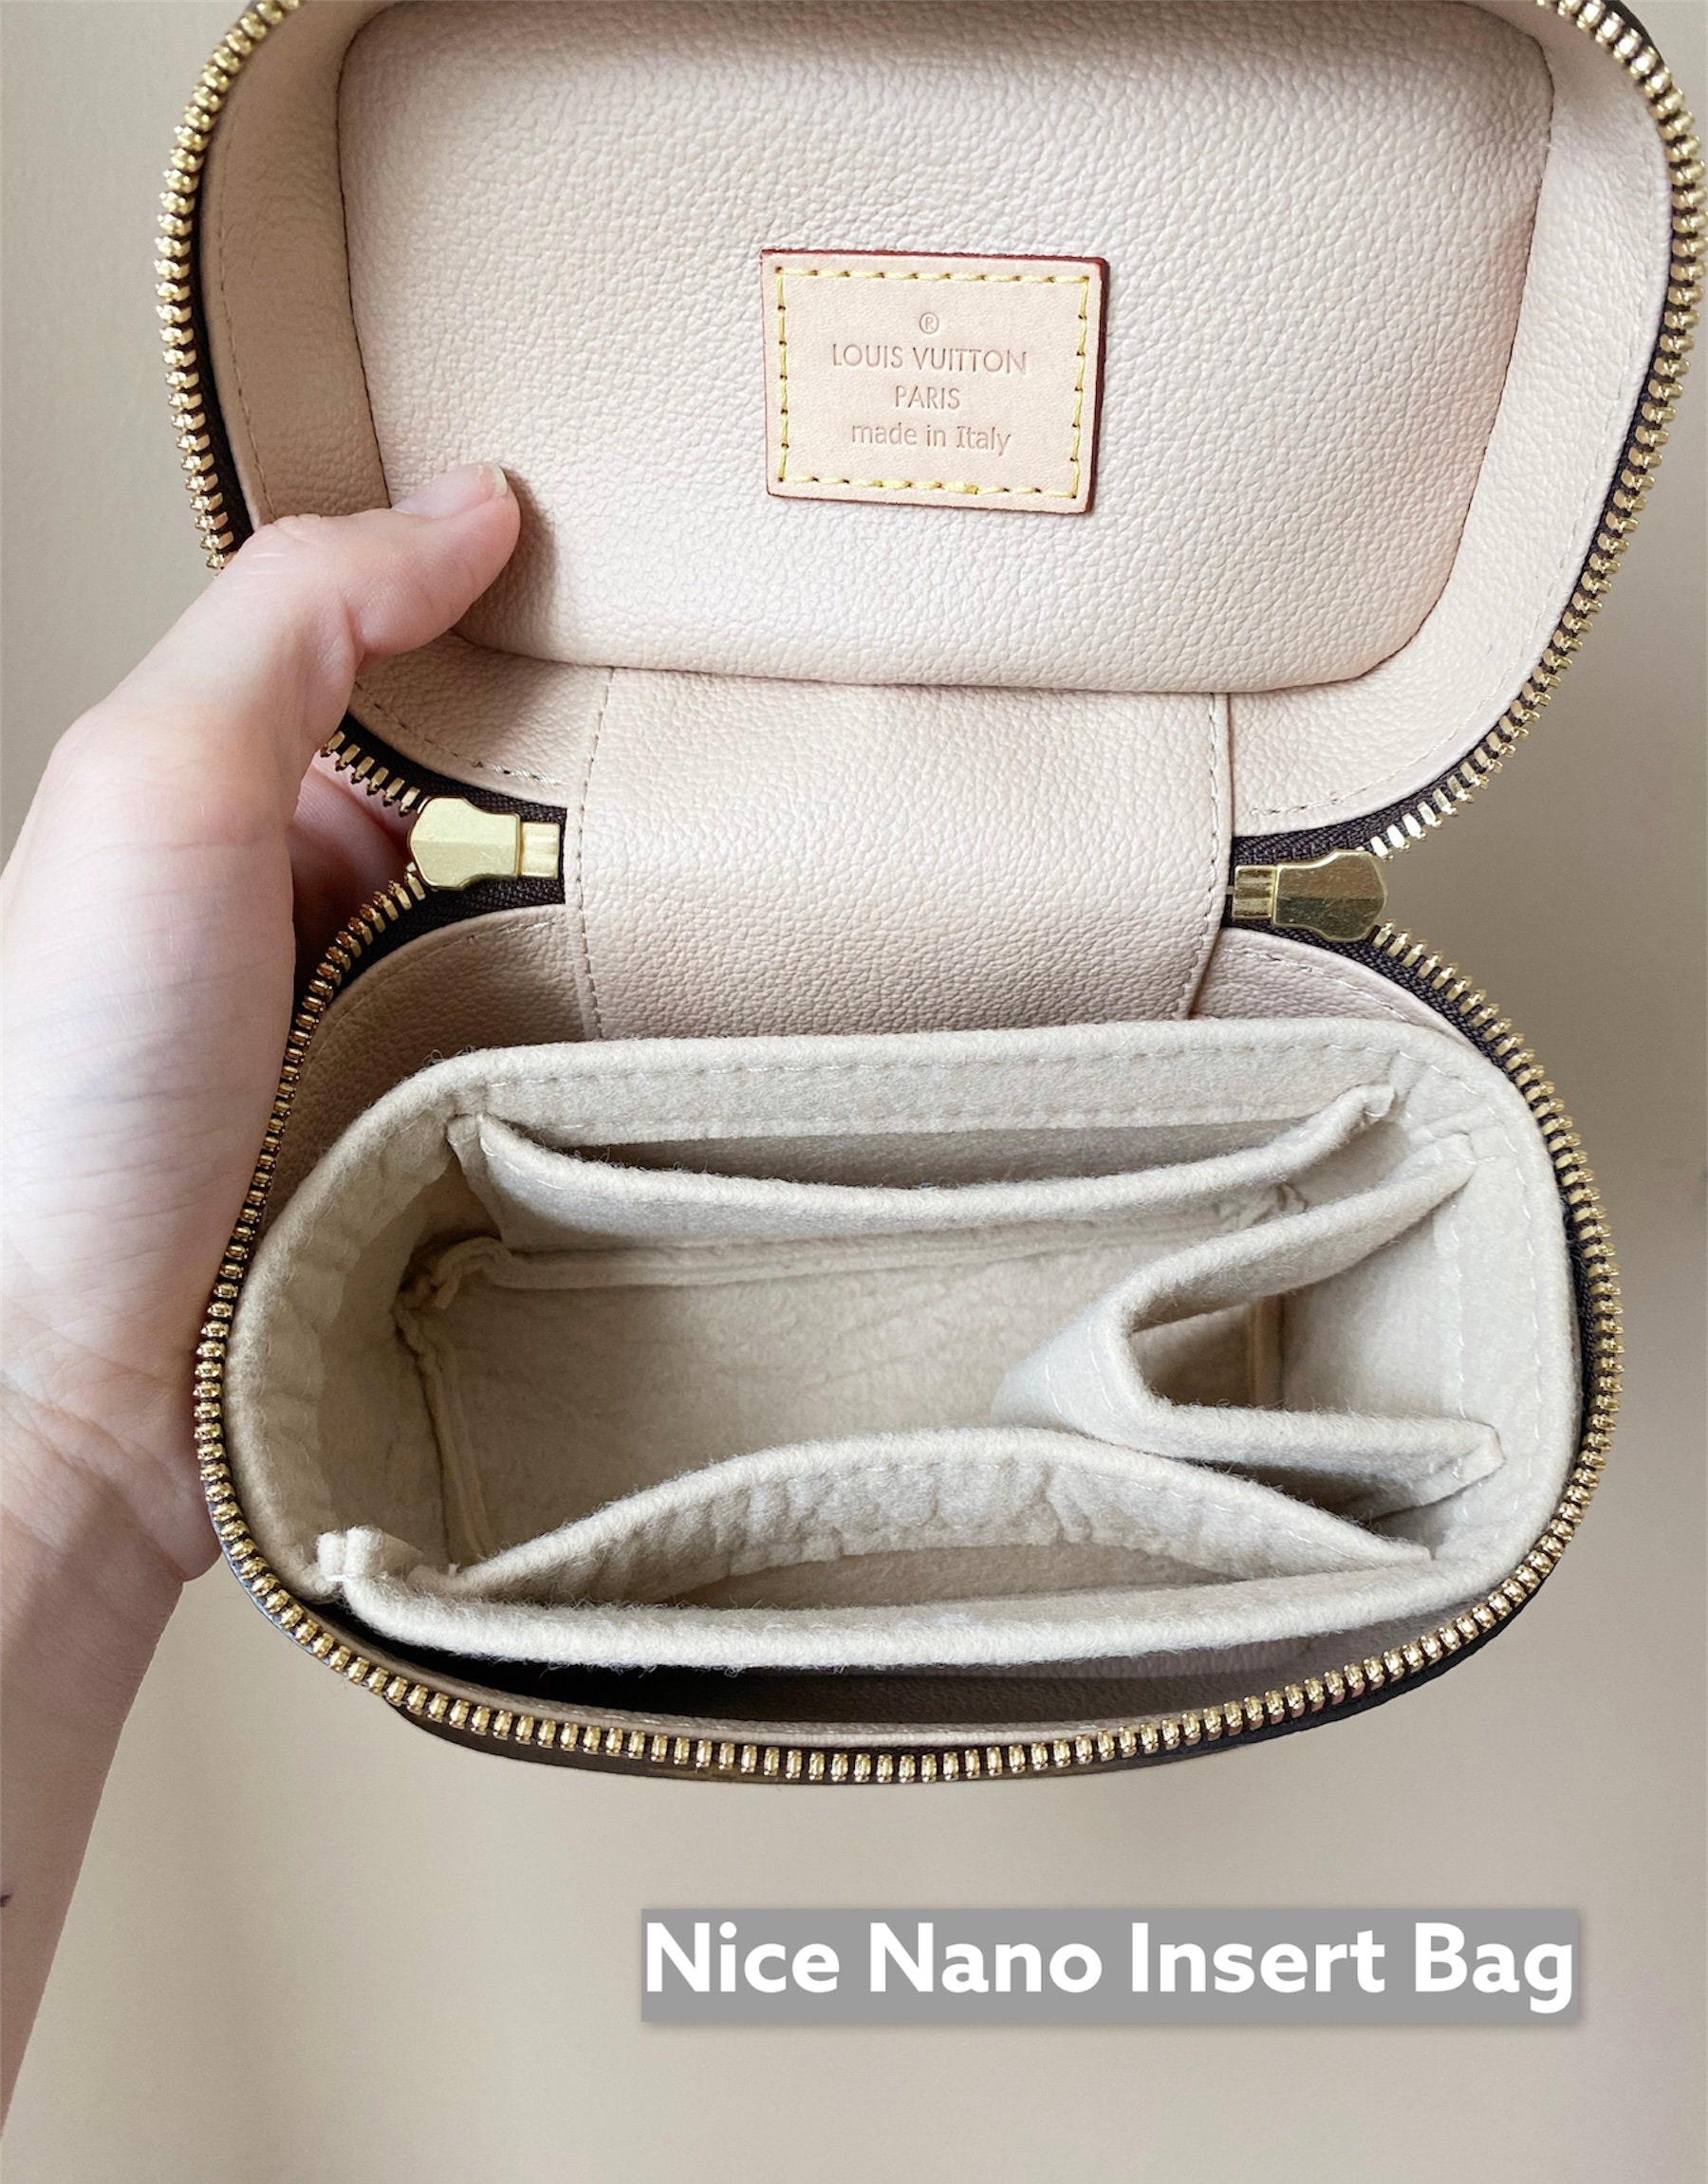 Bags, Brand New Louis Vuitton Nice Mini Insert Organizer